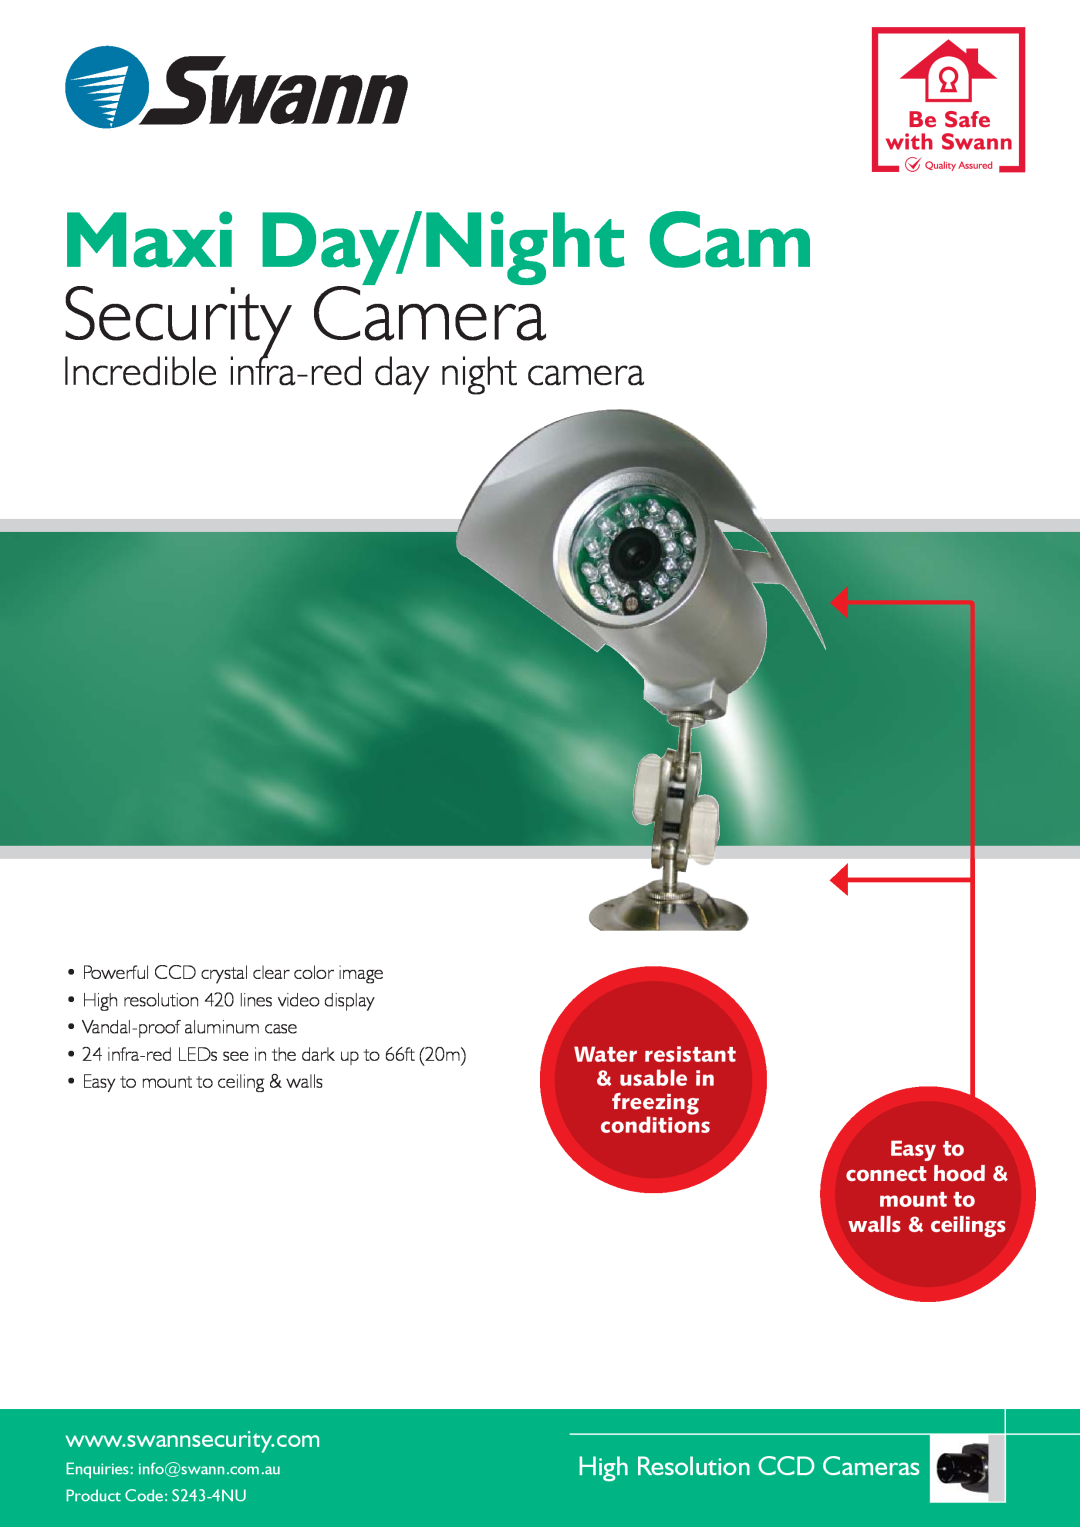 Swann manual High Resolution CCD Cameras, Enquiries info@swann.com.au, Product Code S243-4NU, Maxi Day/Night Cam 